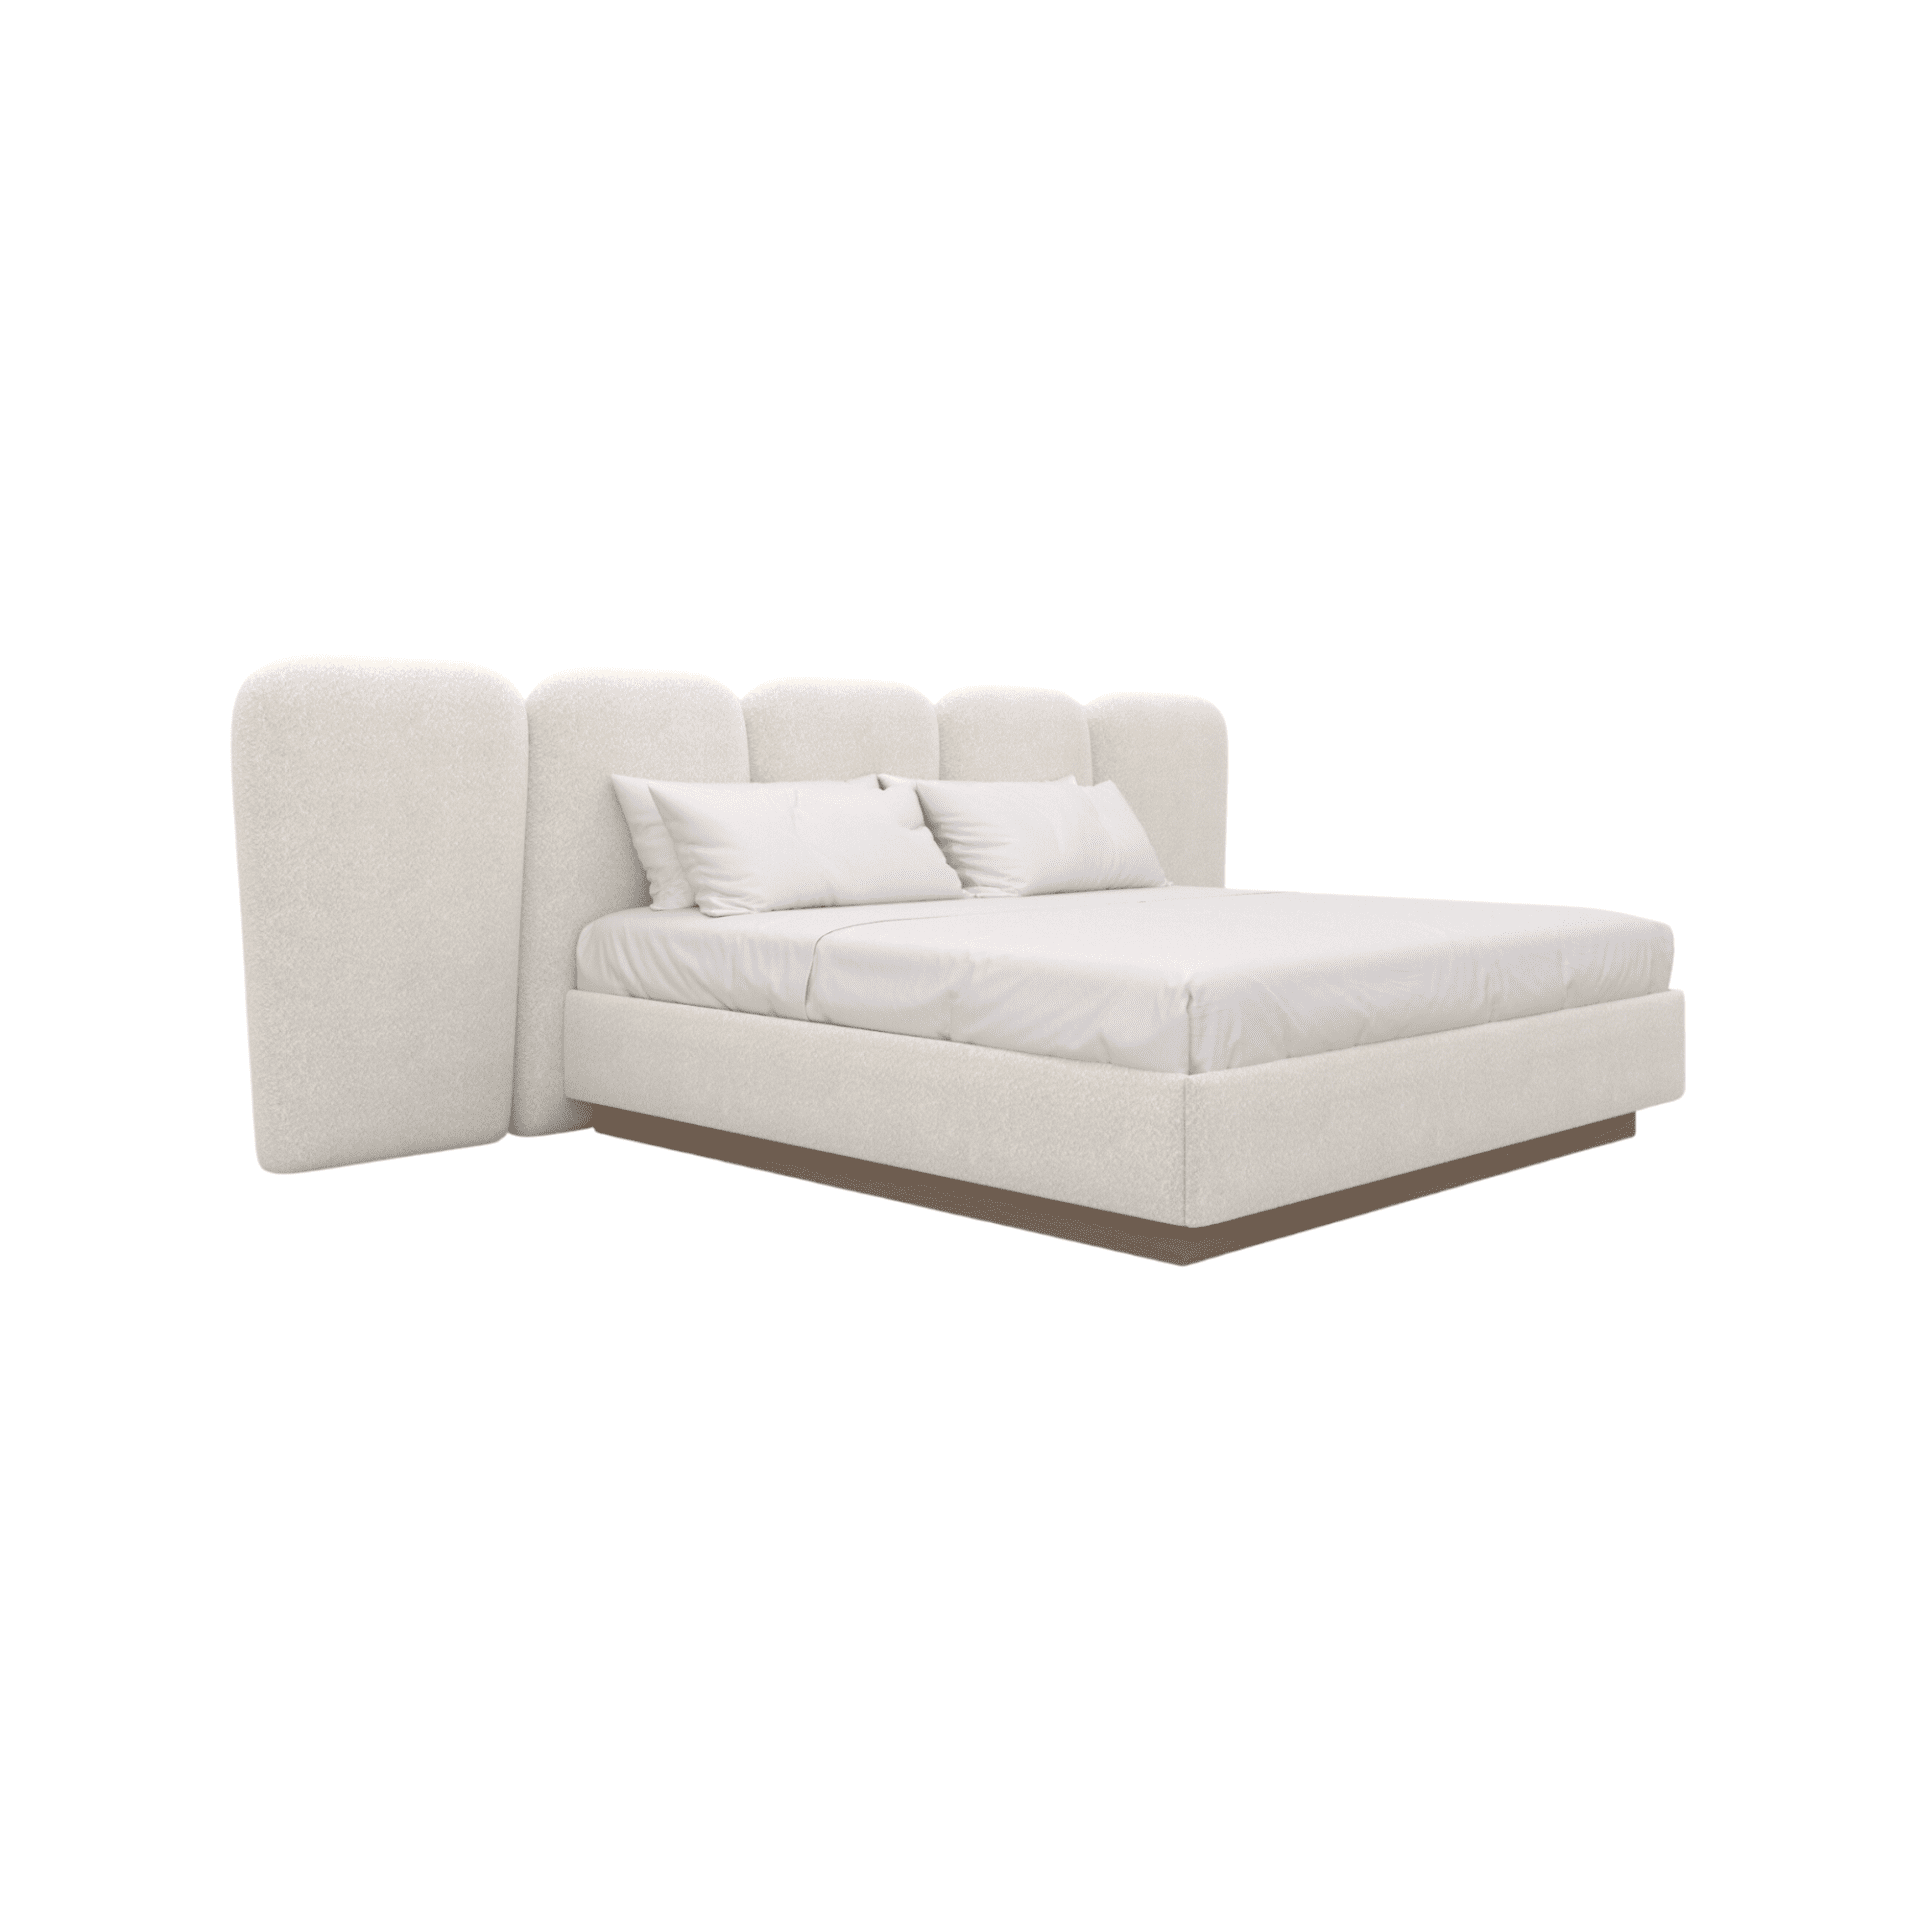 HARMONY-freestanding-upholstered-headboard-bed-luxury-furniture-blend-home-furnishings